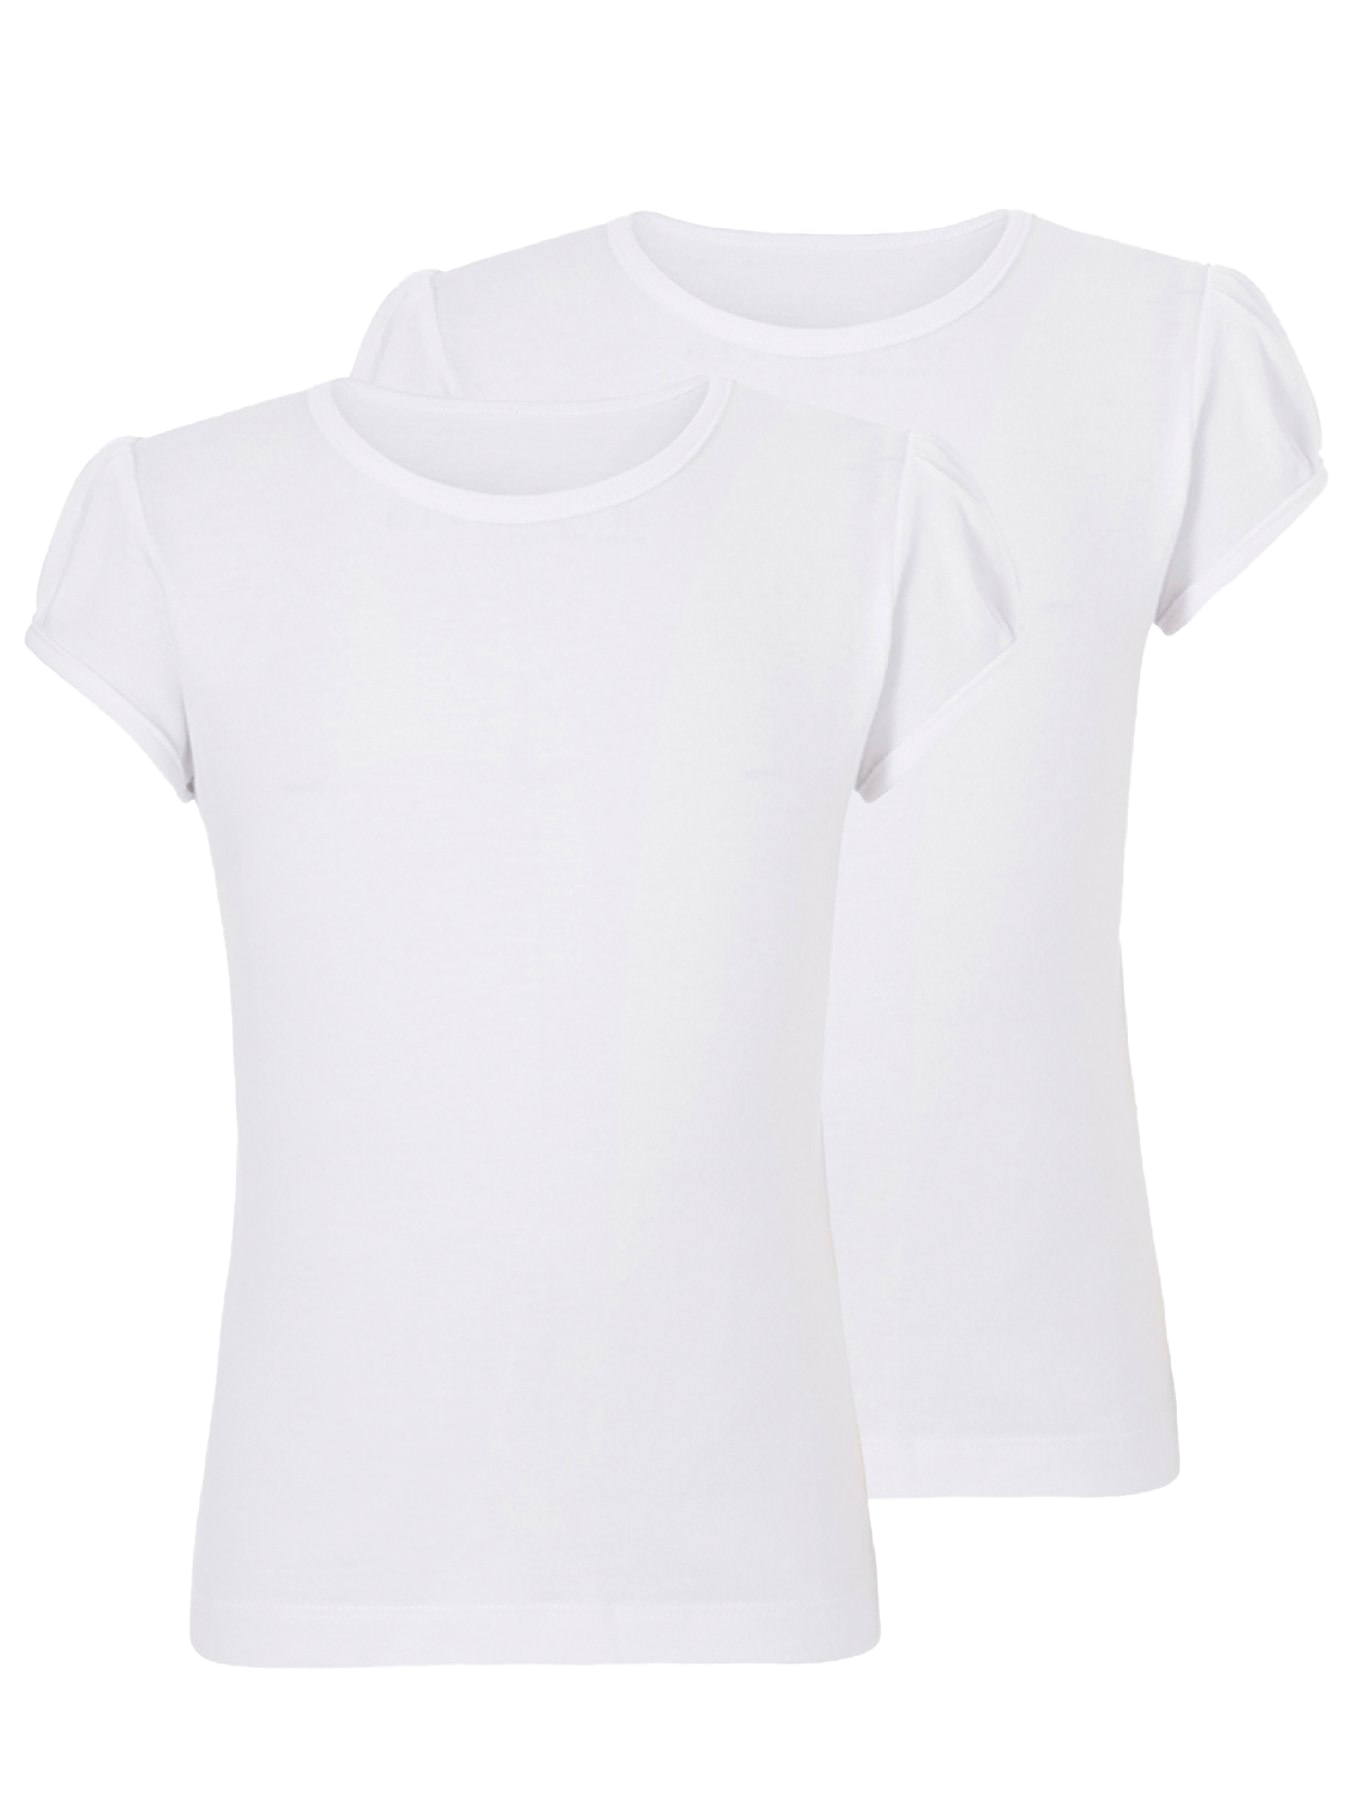 T-shirt bianca semplice PNG Scarica limmagine